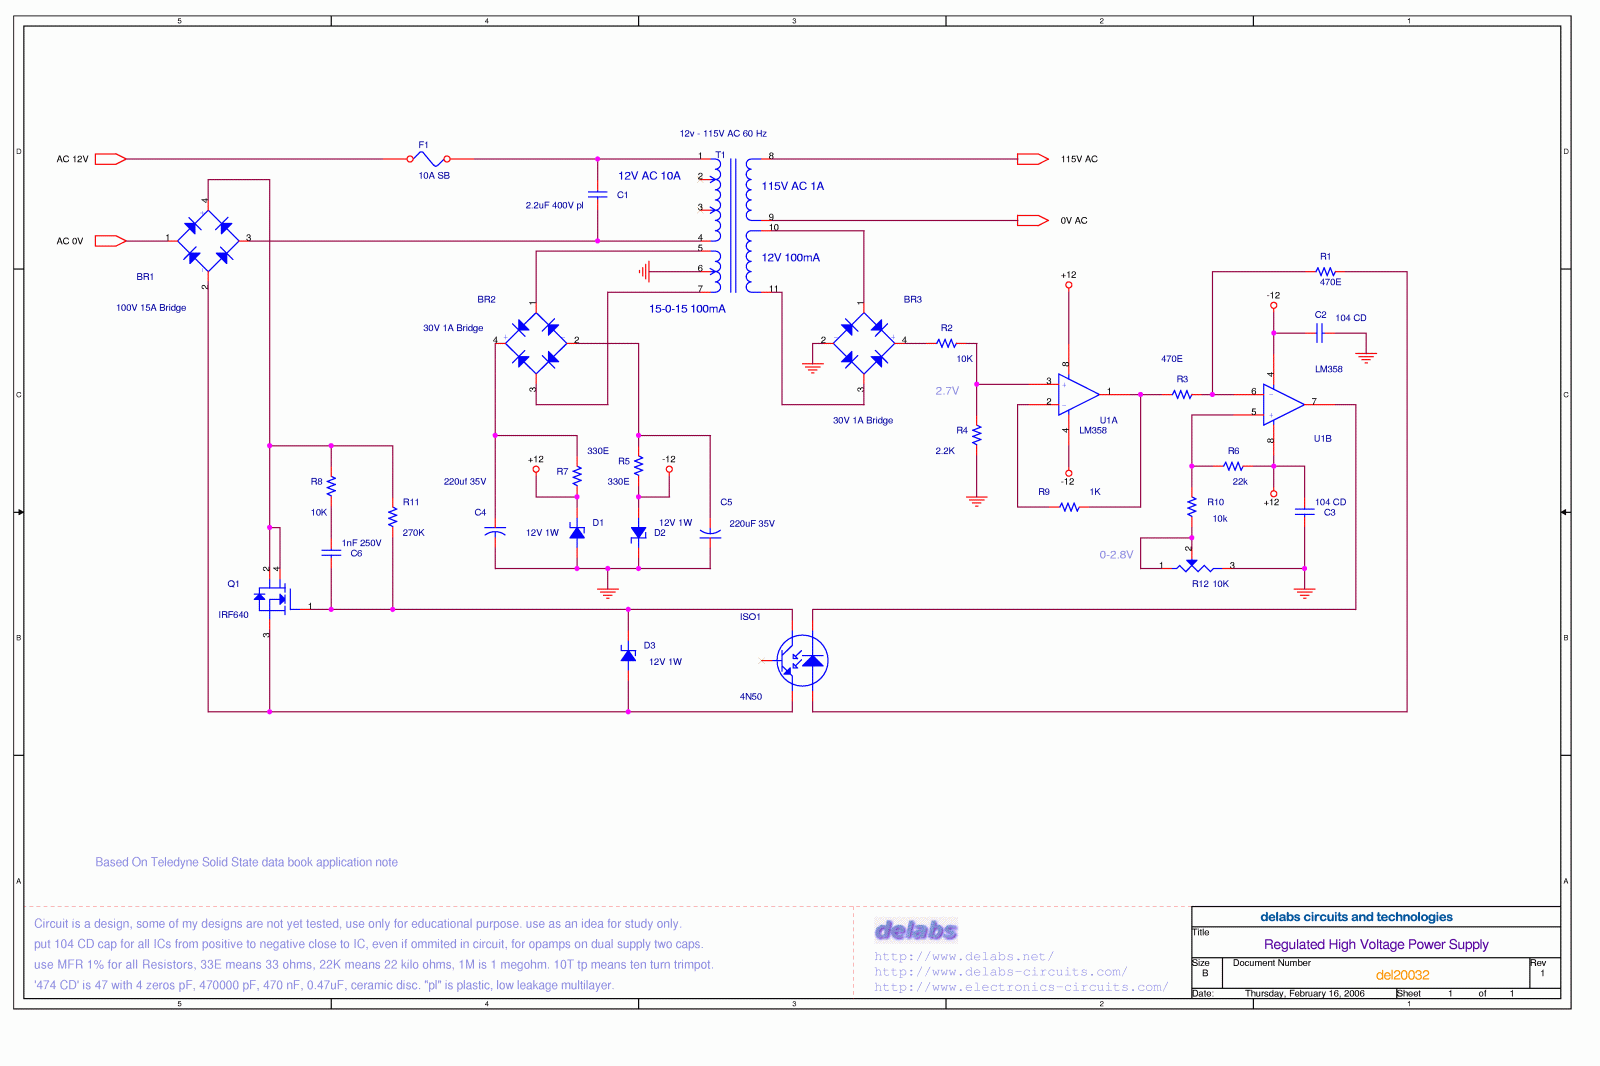 Regulated High Voltage Power Supply - del20032 ammeter schematic diagram 